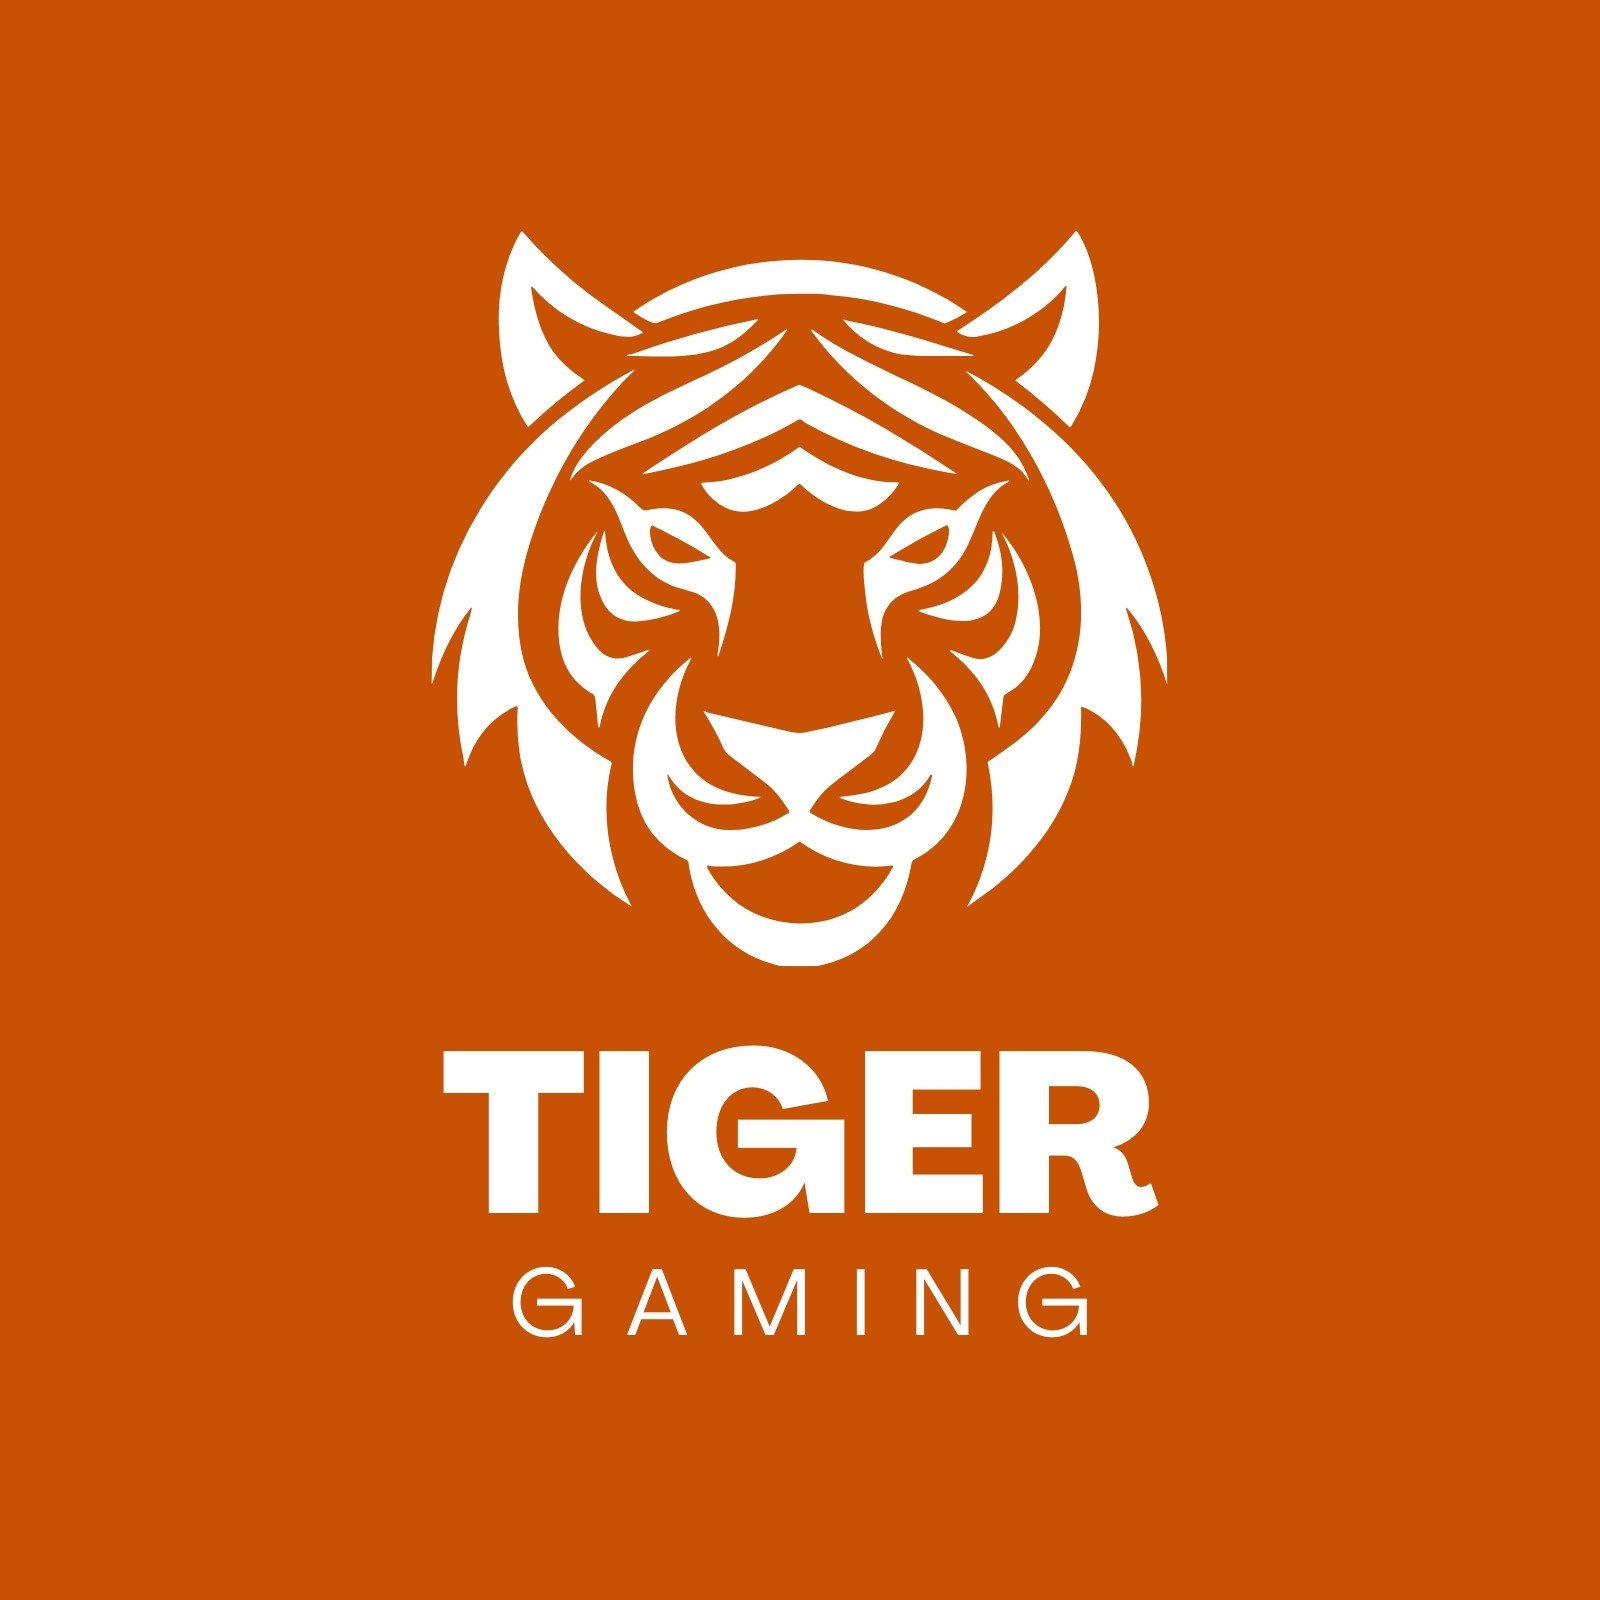 https://marketplace.canva.com/EAF6inc05i0/1/0/1600w/canva-orange-and-white-minimalist-tiger-gaming-logo-XFwNr0_qd-k.jpg